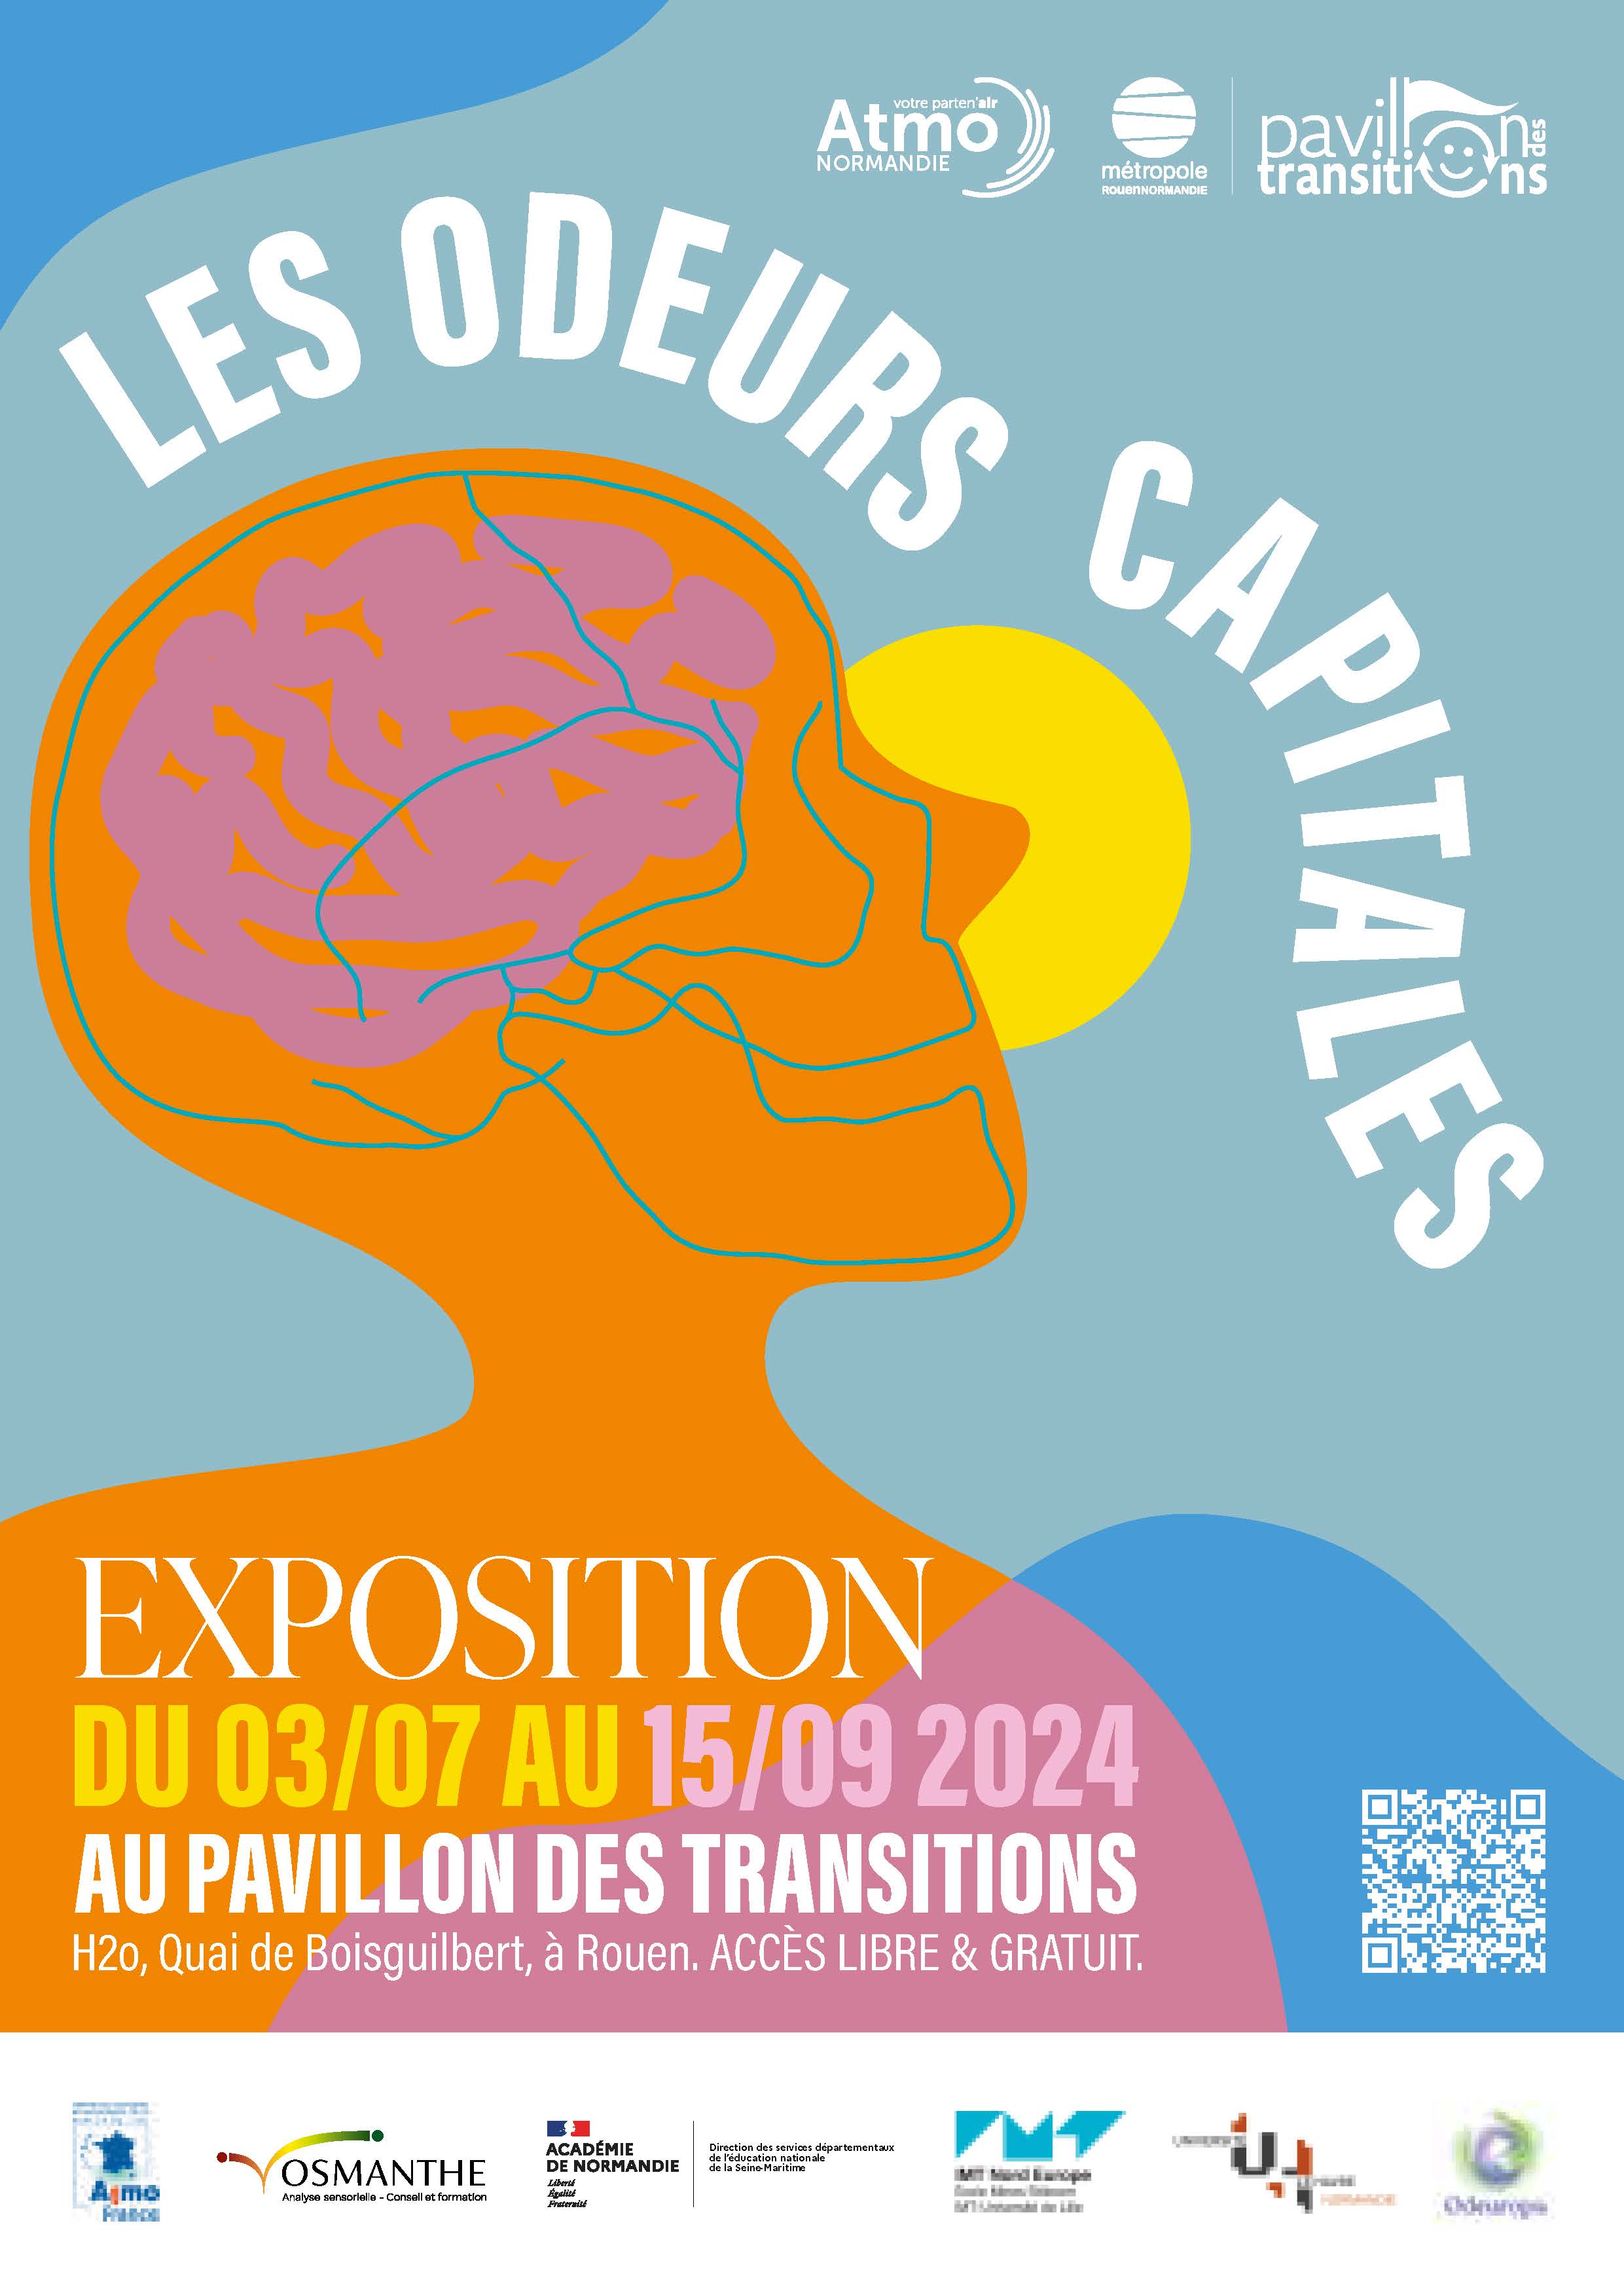 Flyer "L'exposition, Les Odeurs capitales" (recto)